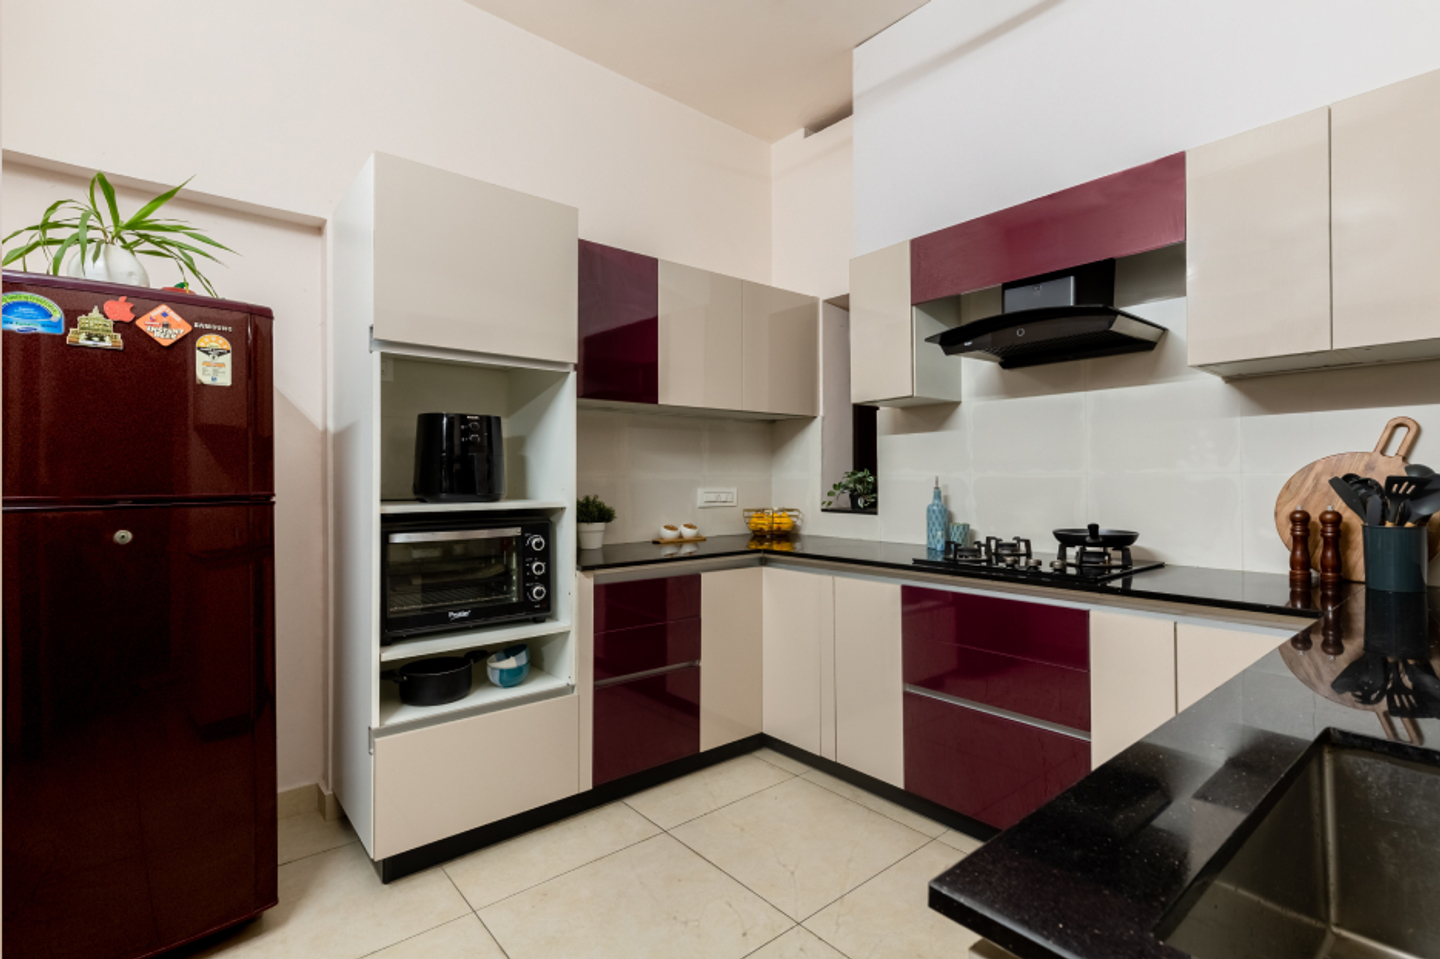 Modern U-Shaped Kitchen Cabinet Design With A Glossy Quartz Countertop